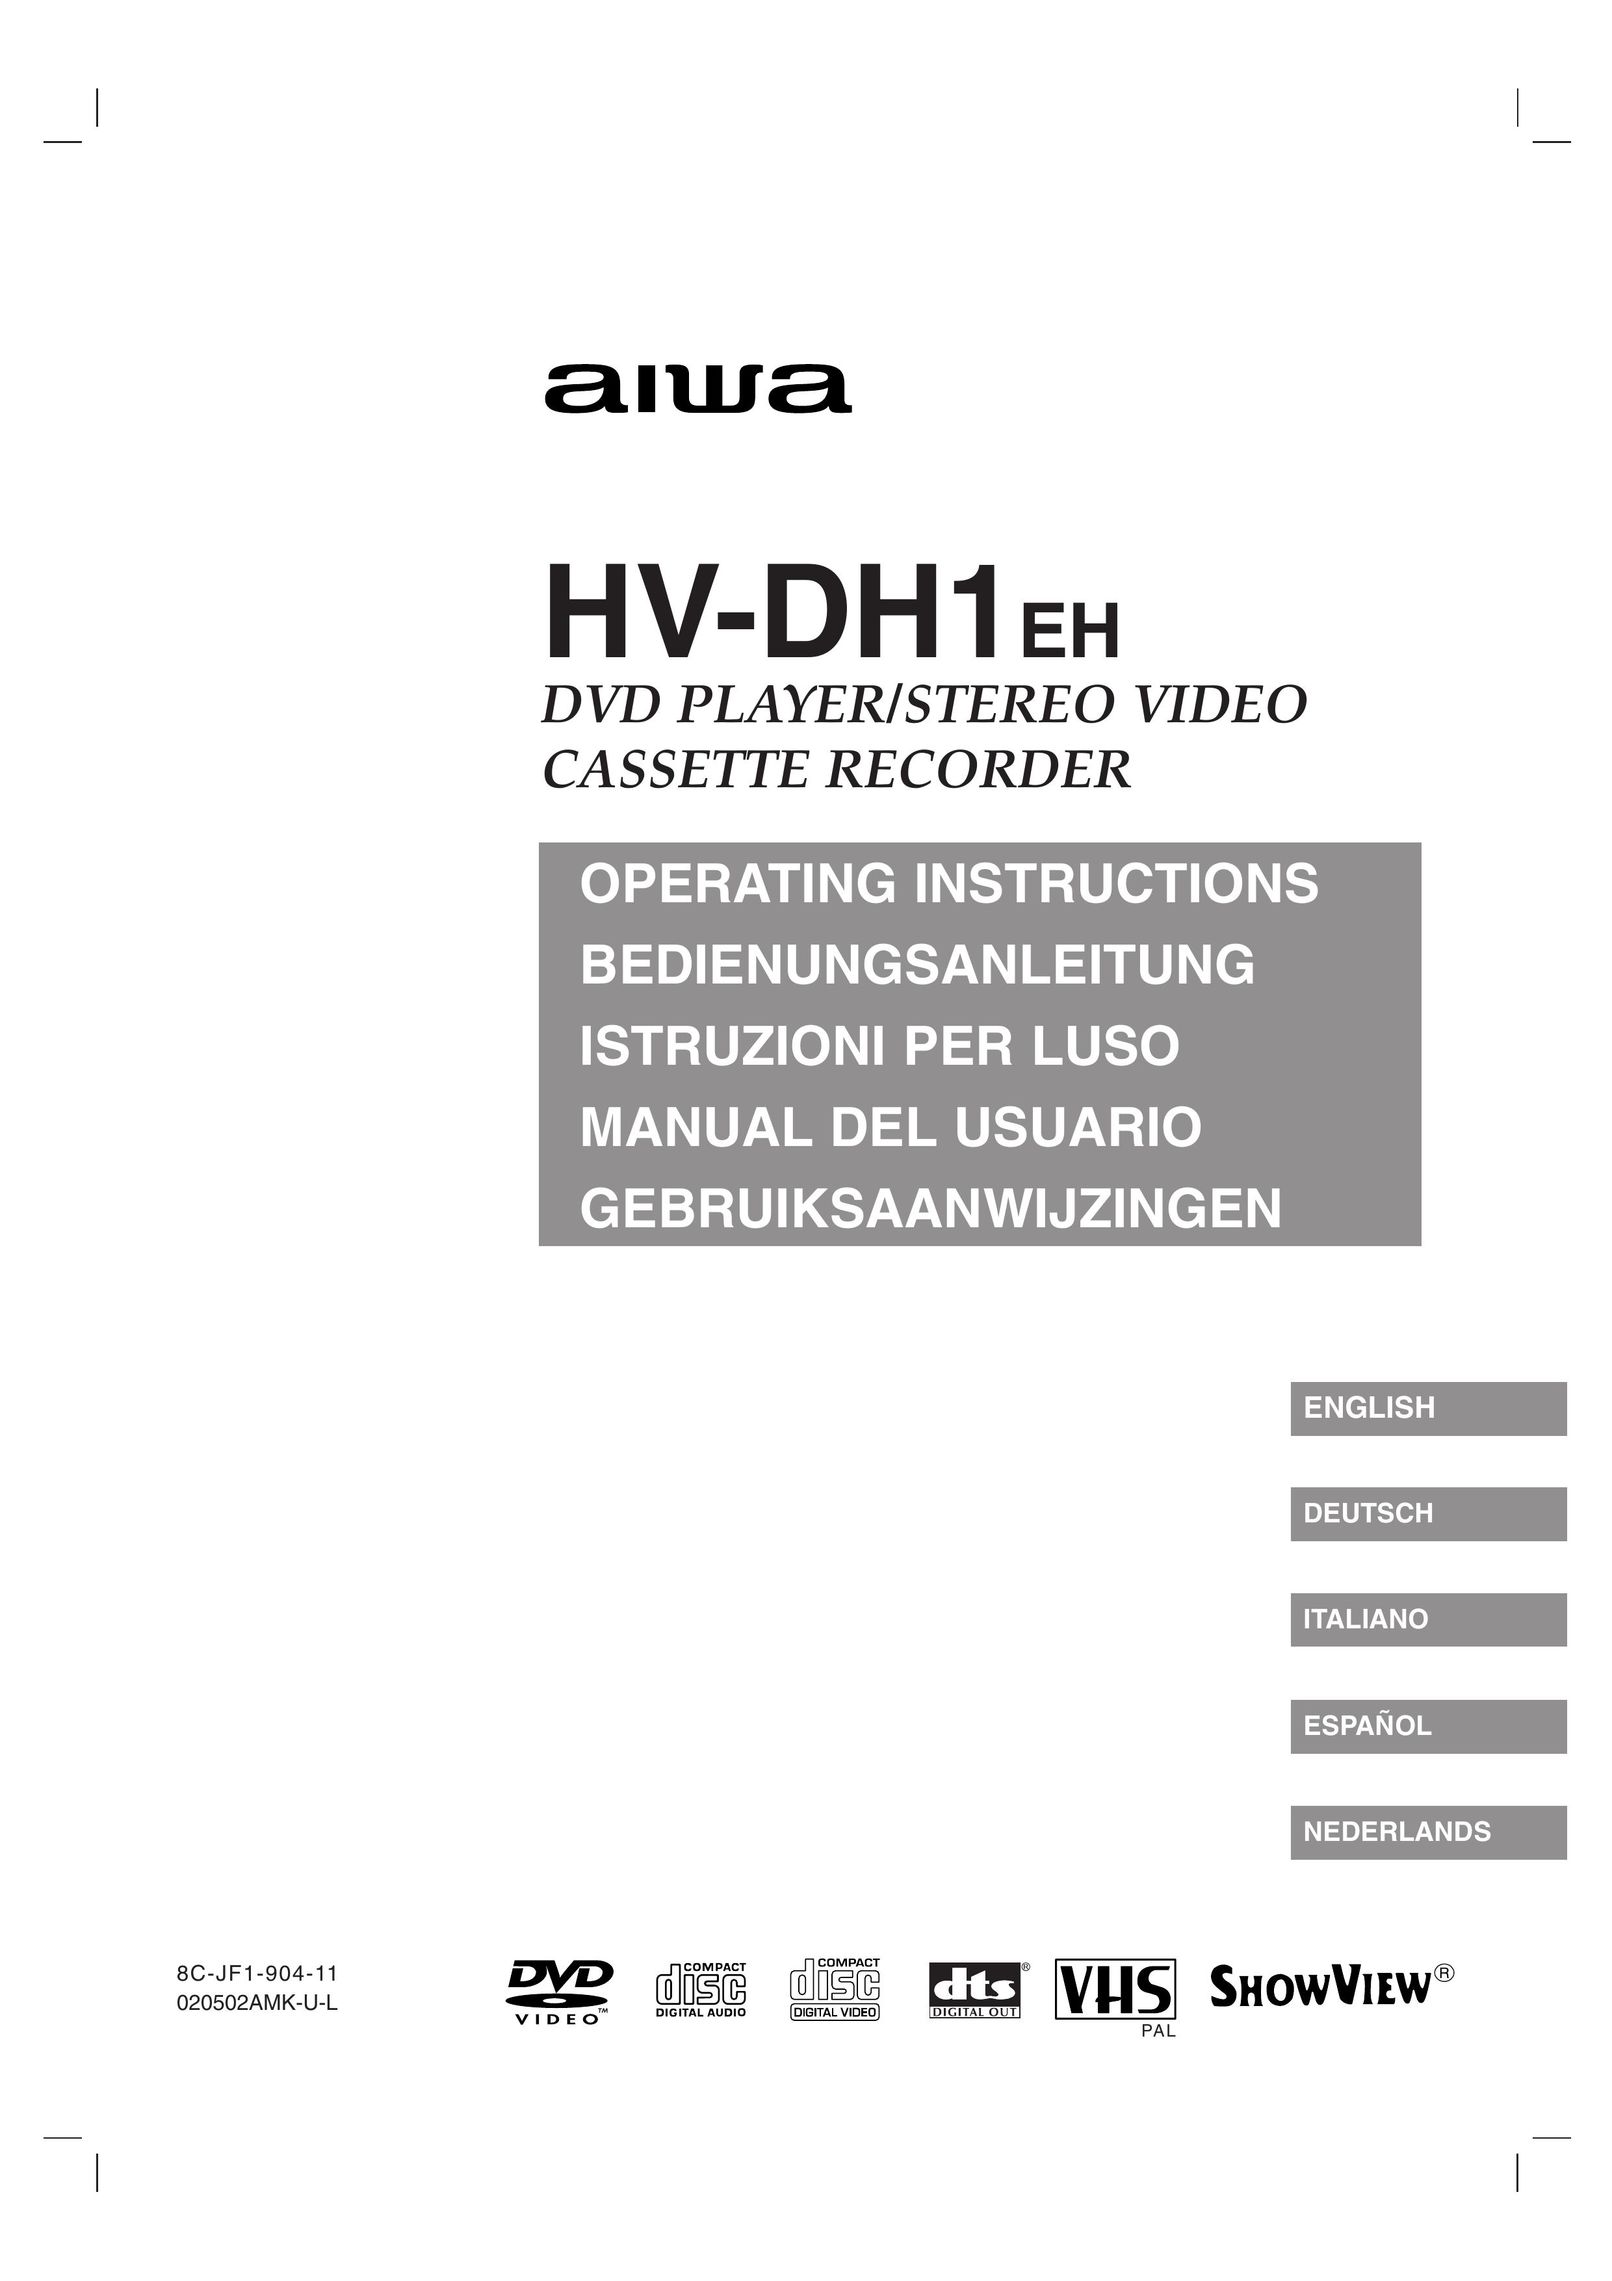 Aiwa HV-DH1EH DVD VCR Combo User Manual